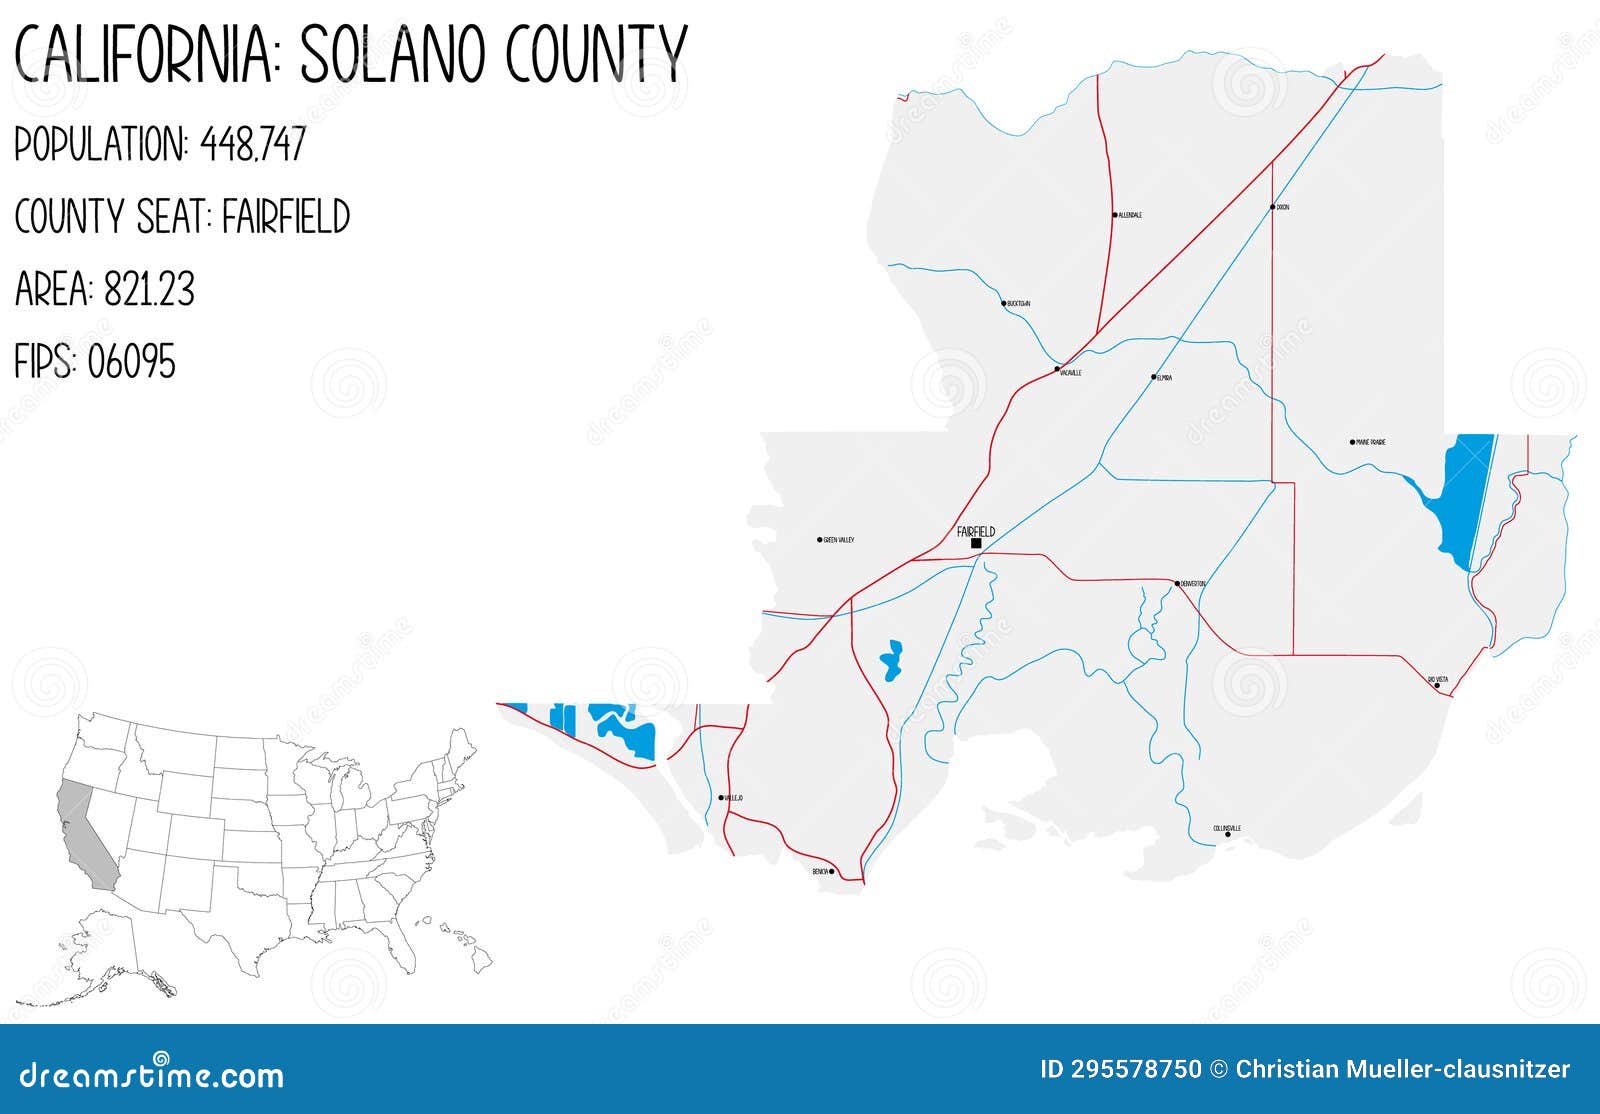 map of solano county in california, usa